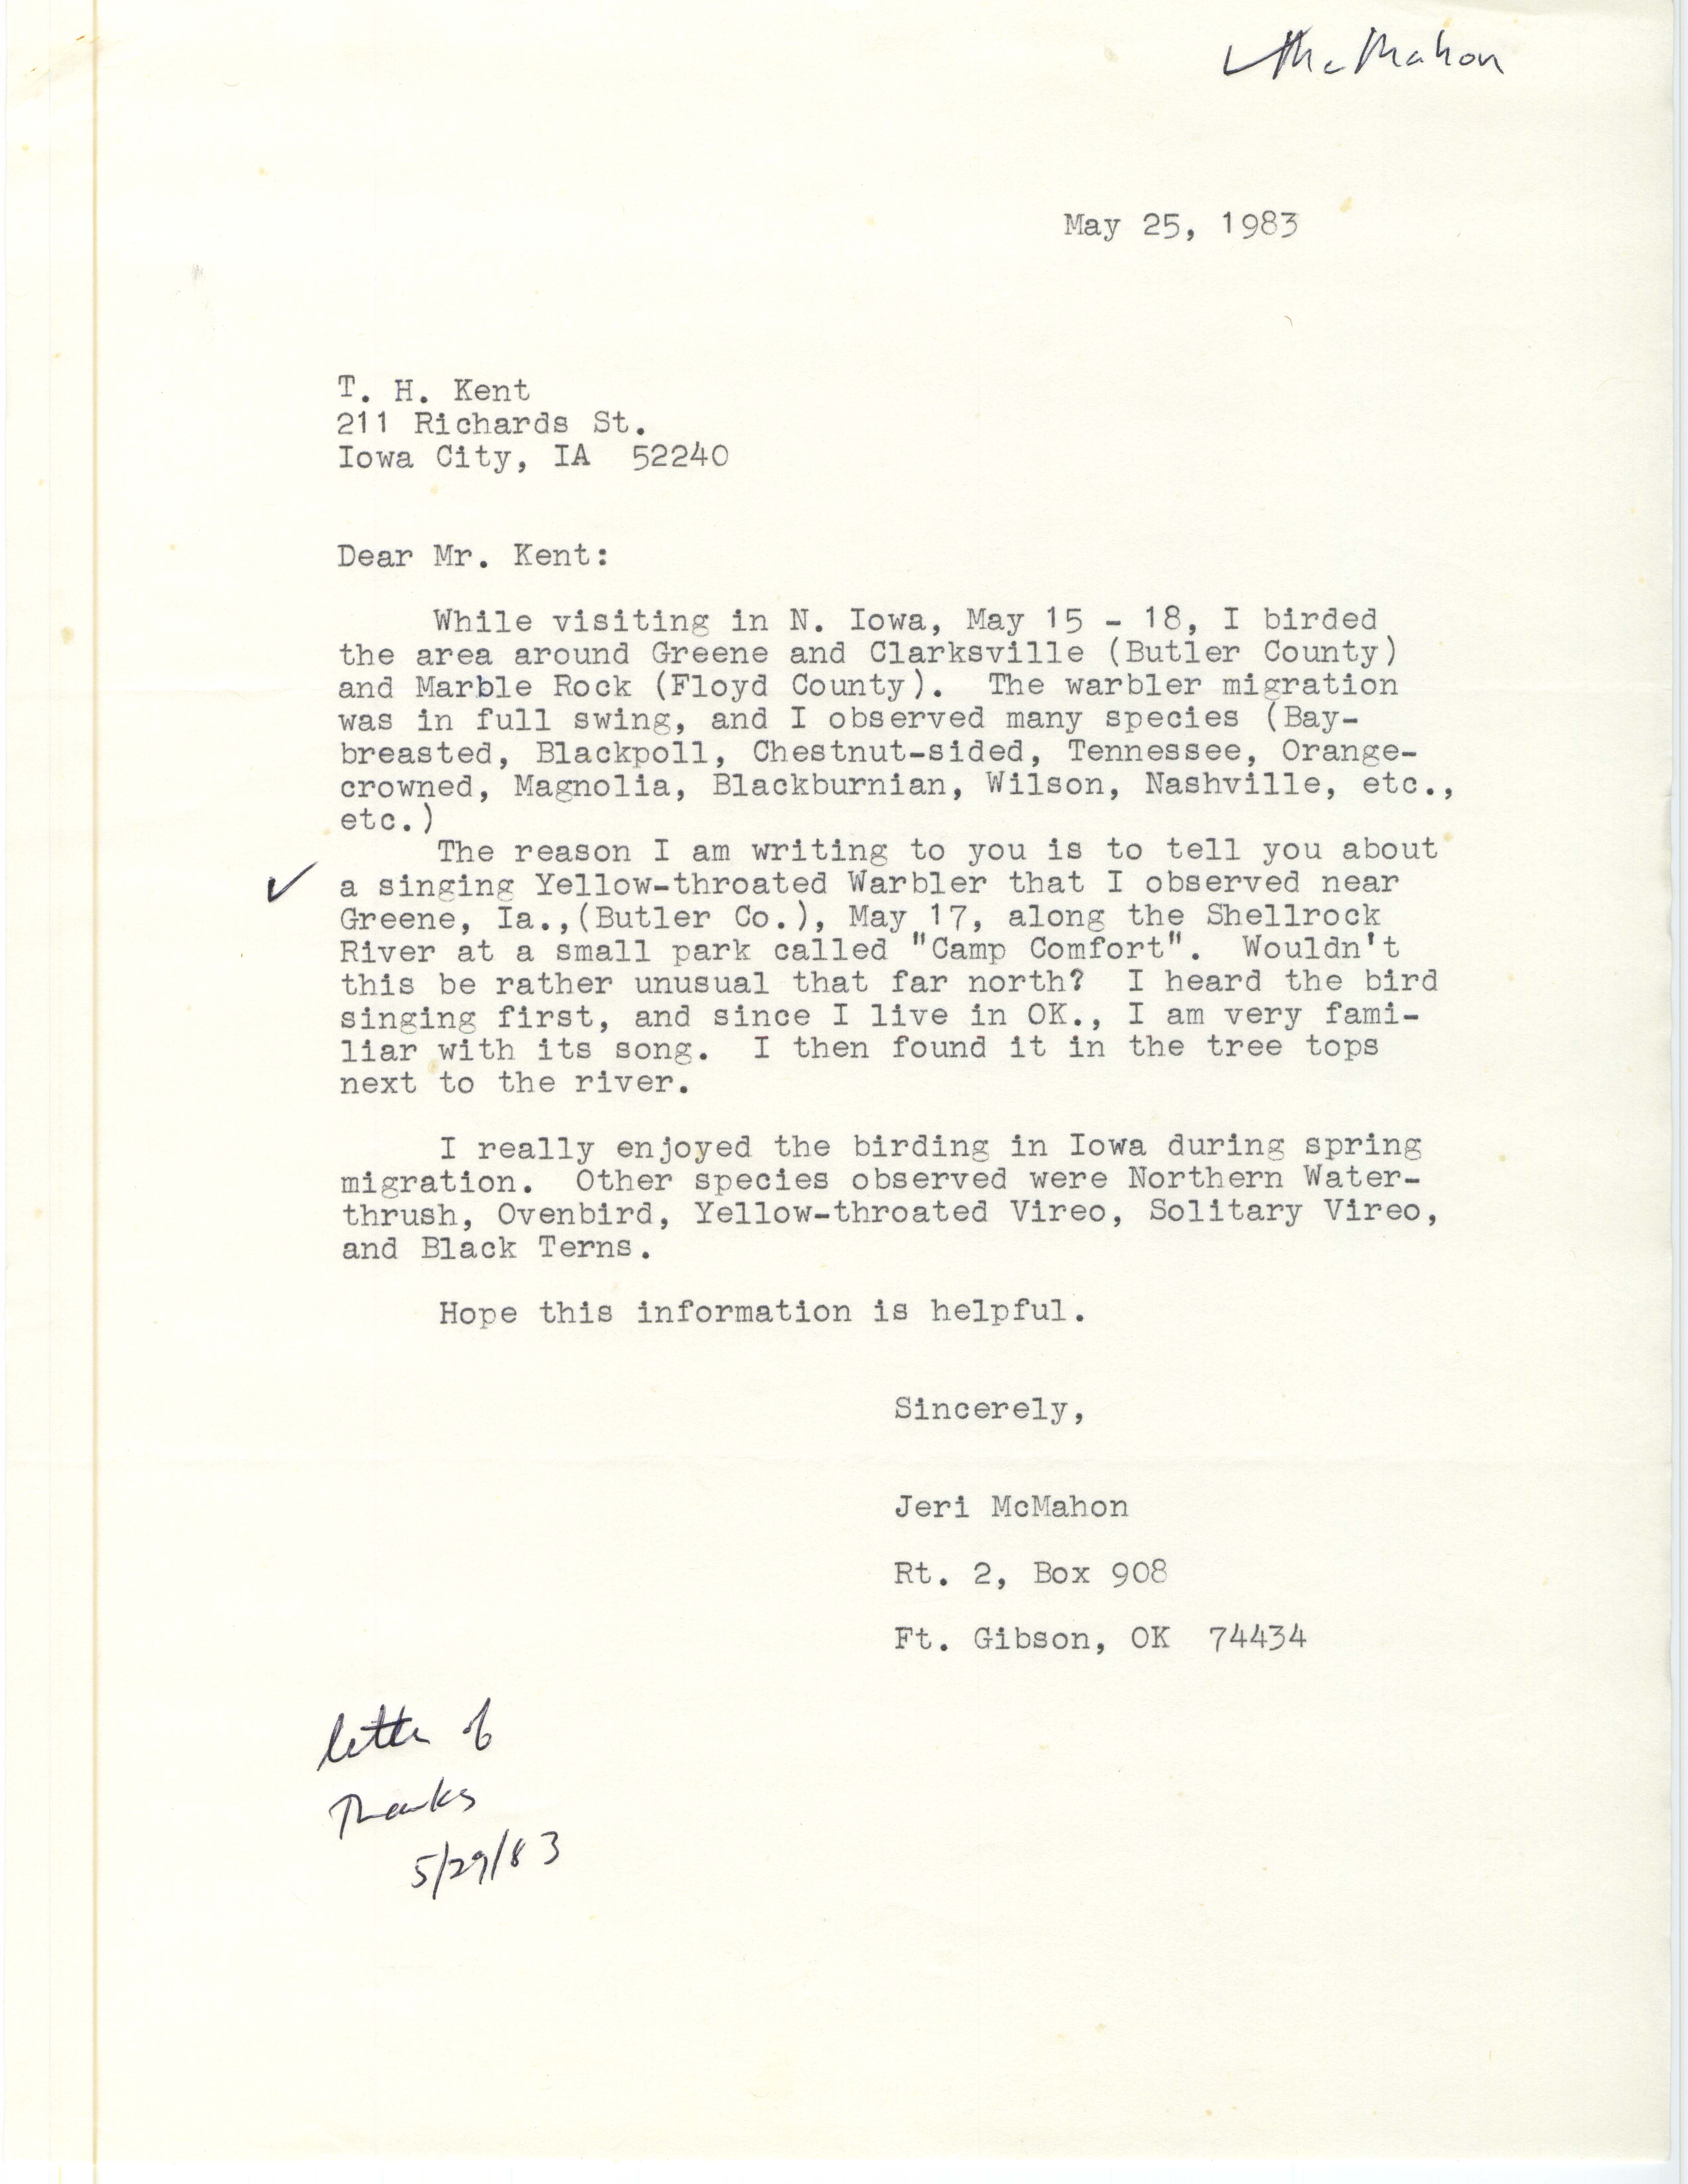 Jeri McMahon letter to Thomas H. Kent regarding bird sightings while visiting Iowa, May 25, 1983